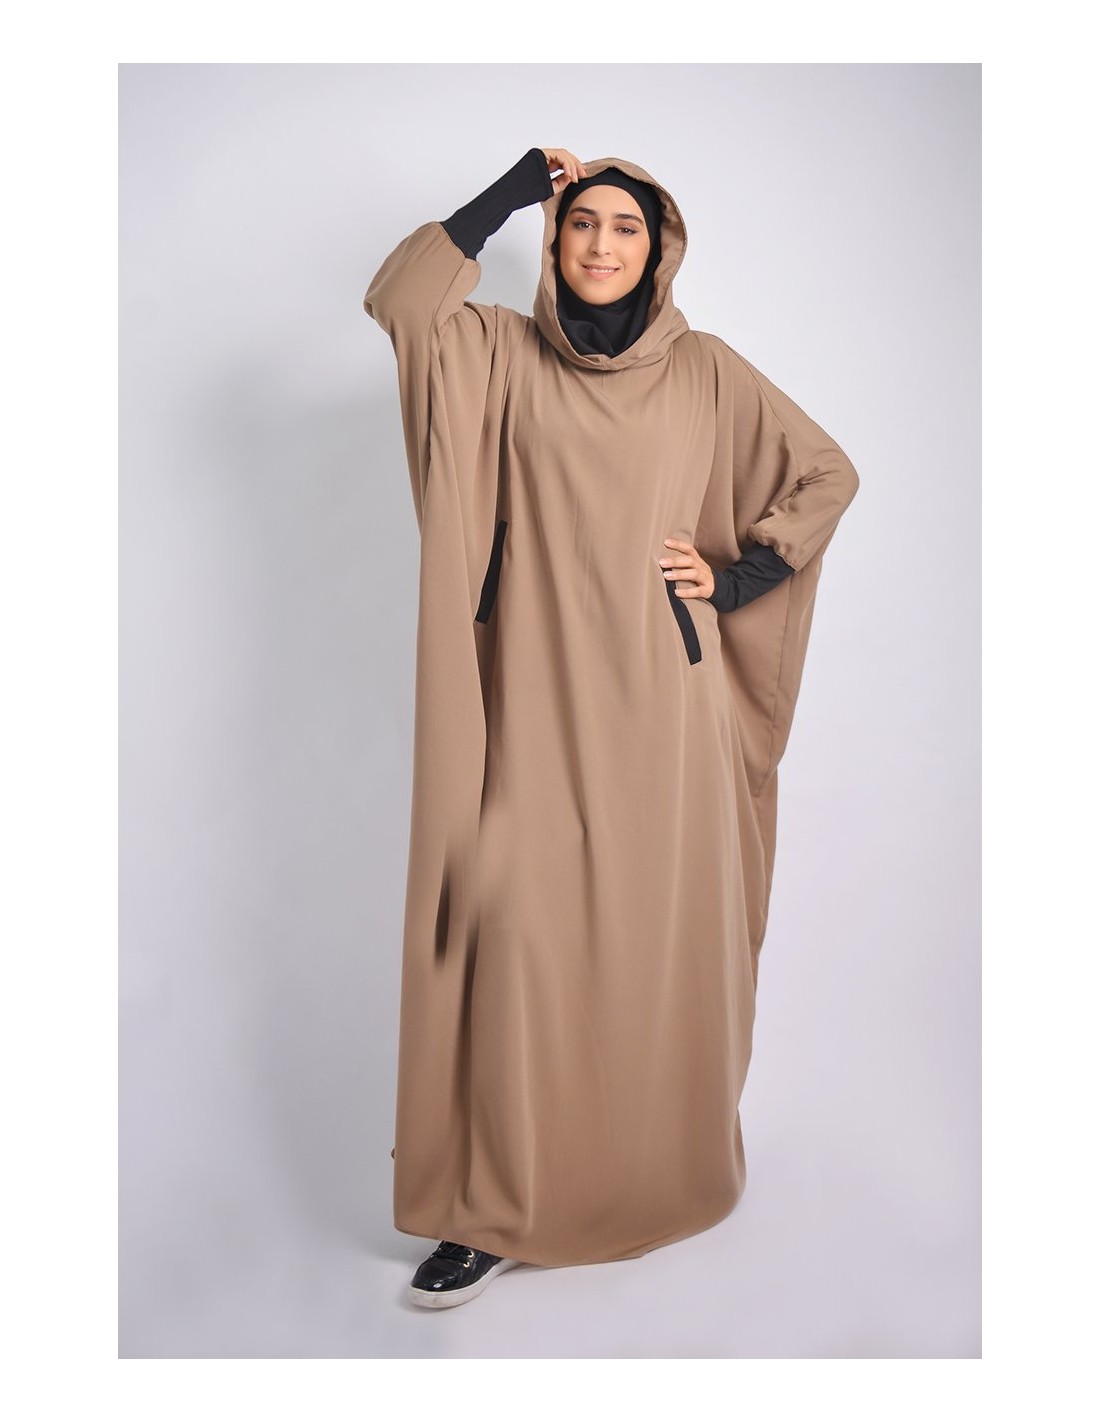 Abaya Young integró el hiyab y la capucha